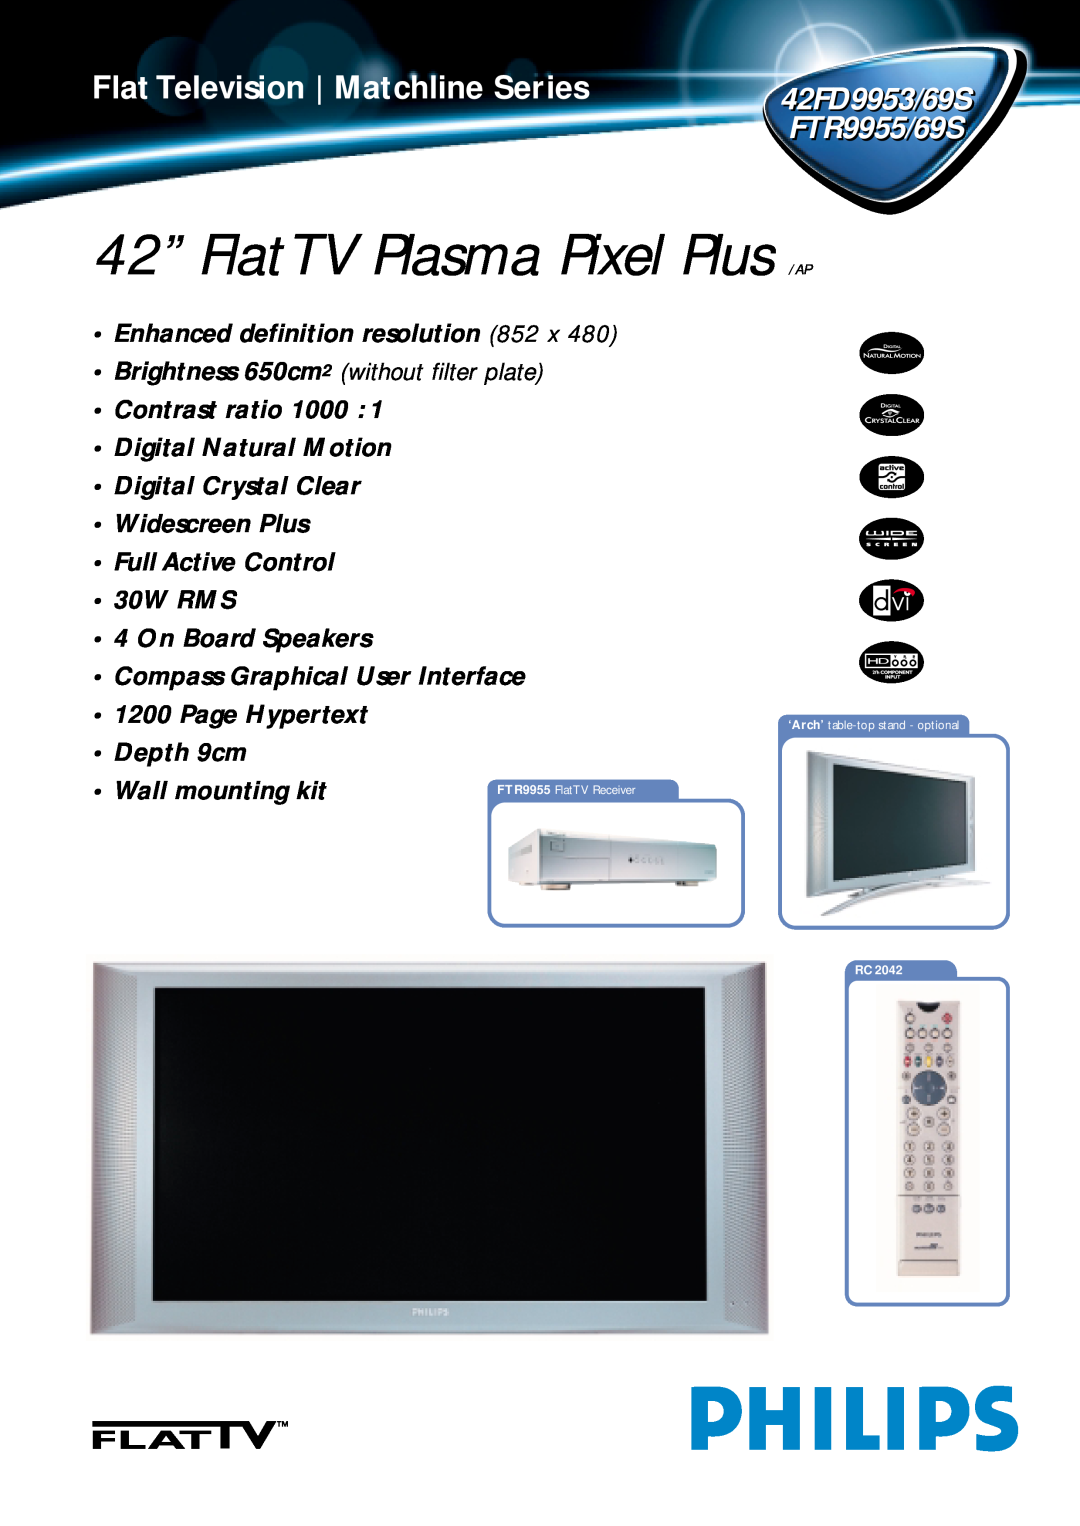 Philips FTR9955/69S manual Flat Television Matchline Series, 42FD9953/69S, Wall mounting kit, 42” FlatTV Plasma Pixel Plus 